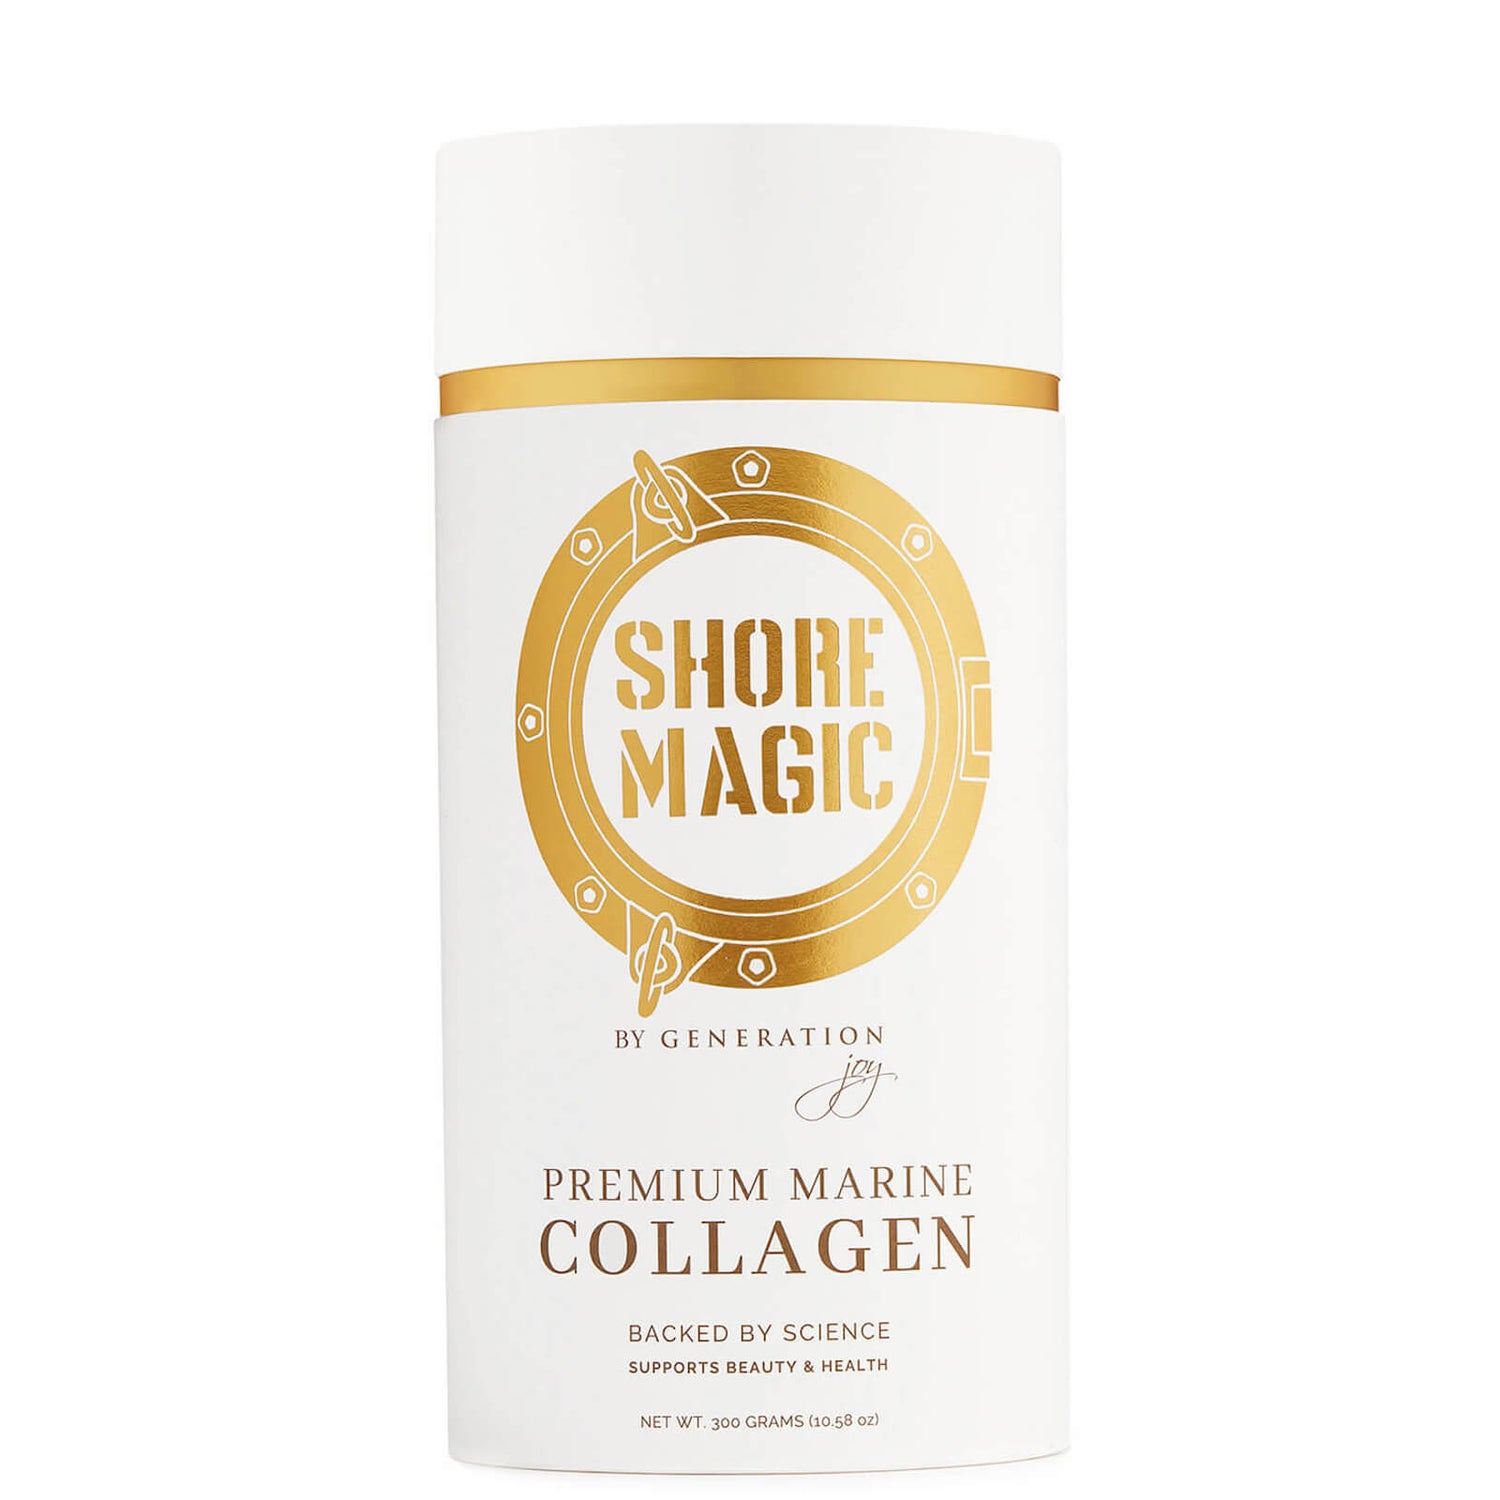 Collagen marine premium. Коллаген Мэджик премиум отзывы.